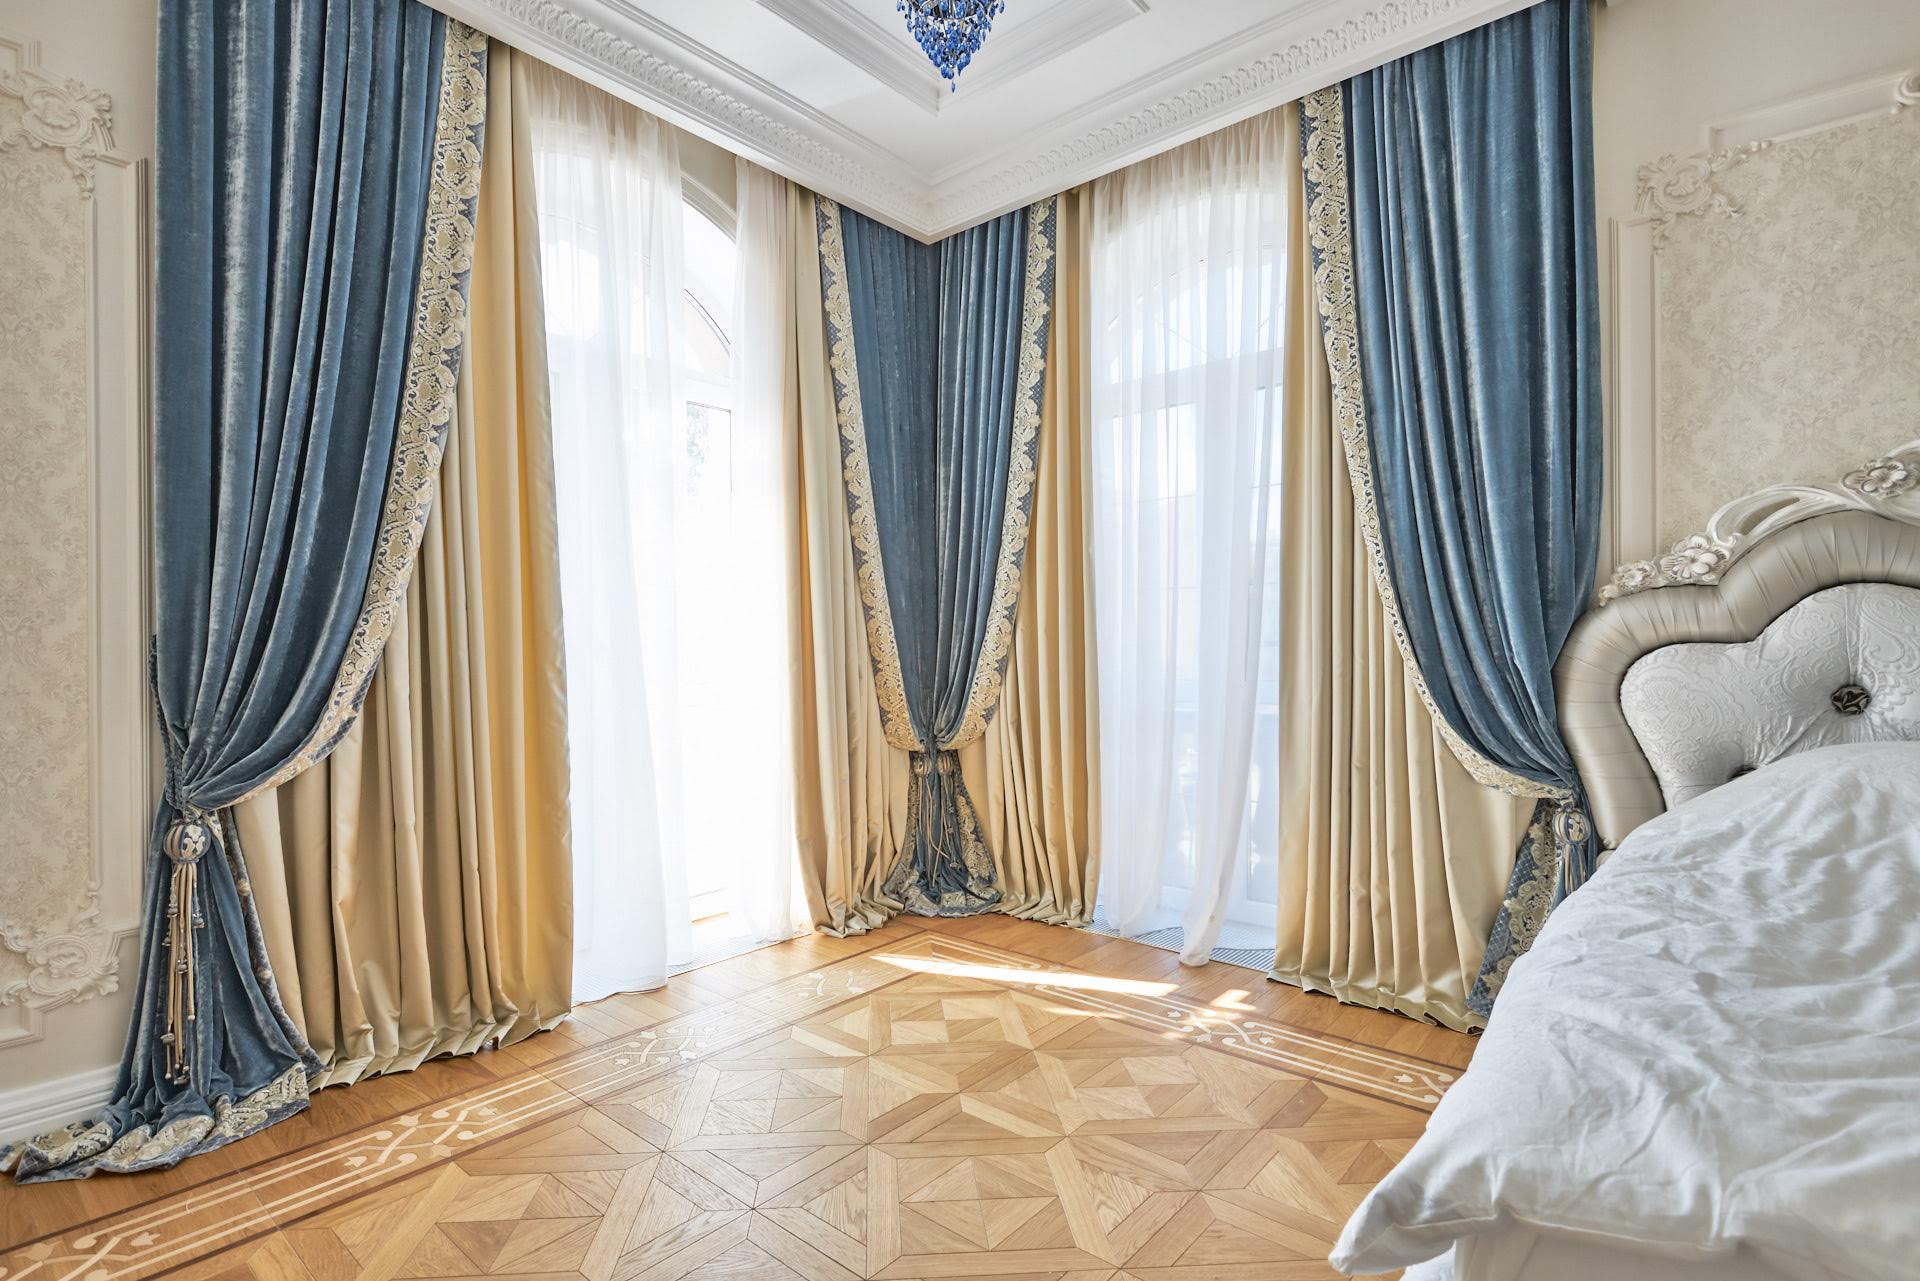 Design, Bedroom design in classic style